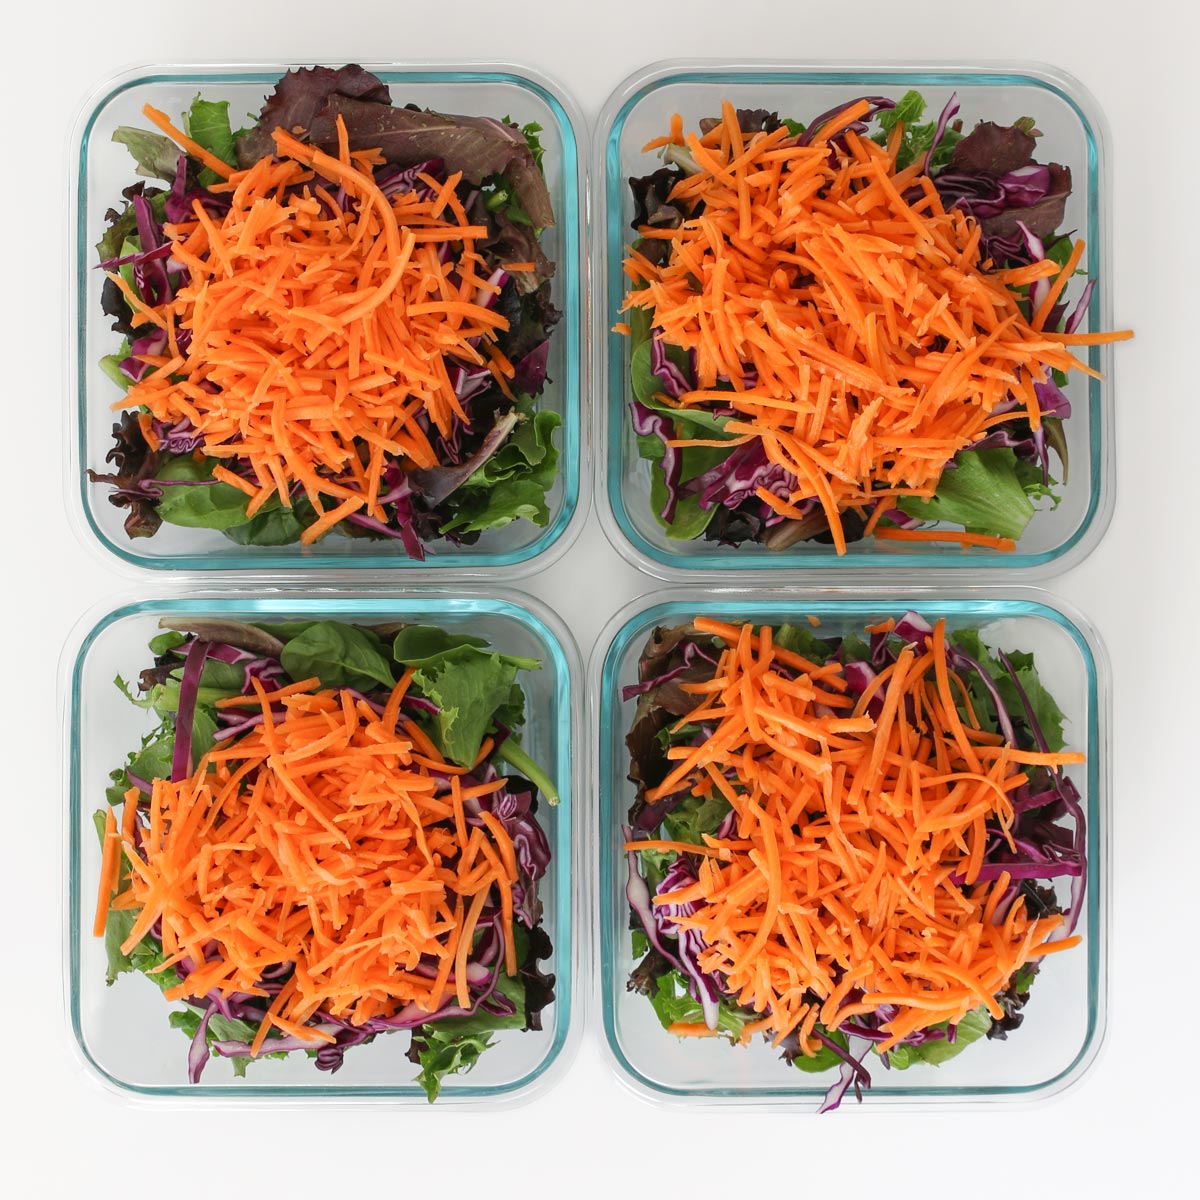 https://goodcheapeats.com/wp-content/uploads/2019/09/meal-prep-salads-prep-3.jpg